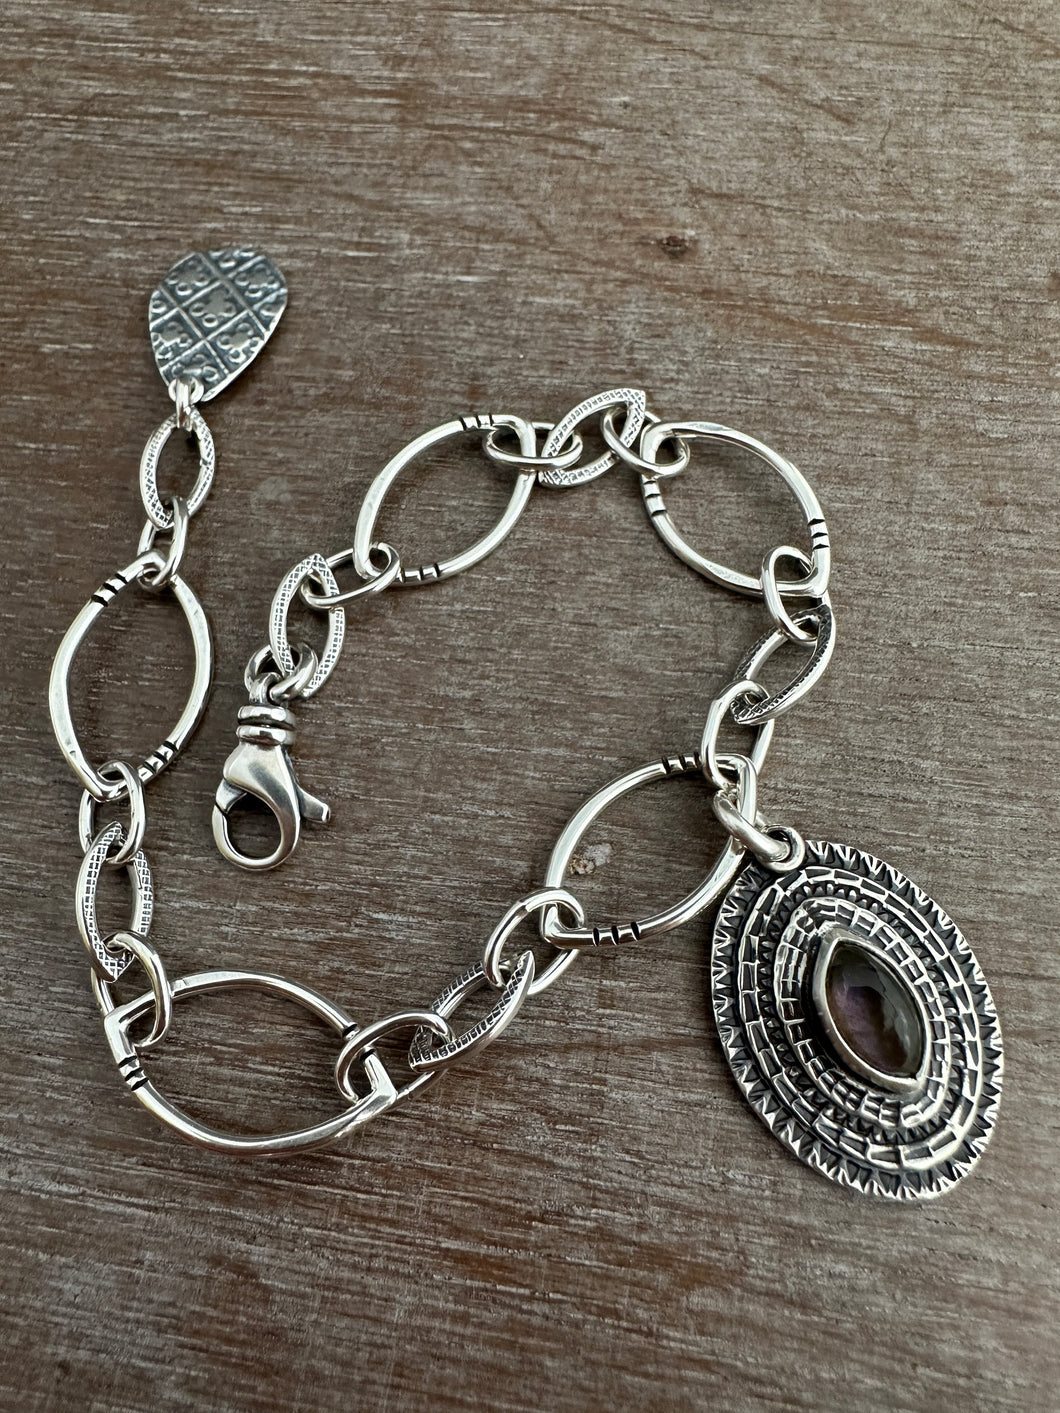 Handmade bracelet with charms